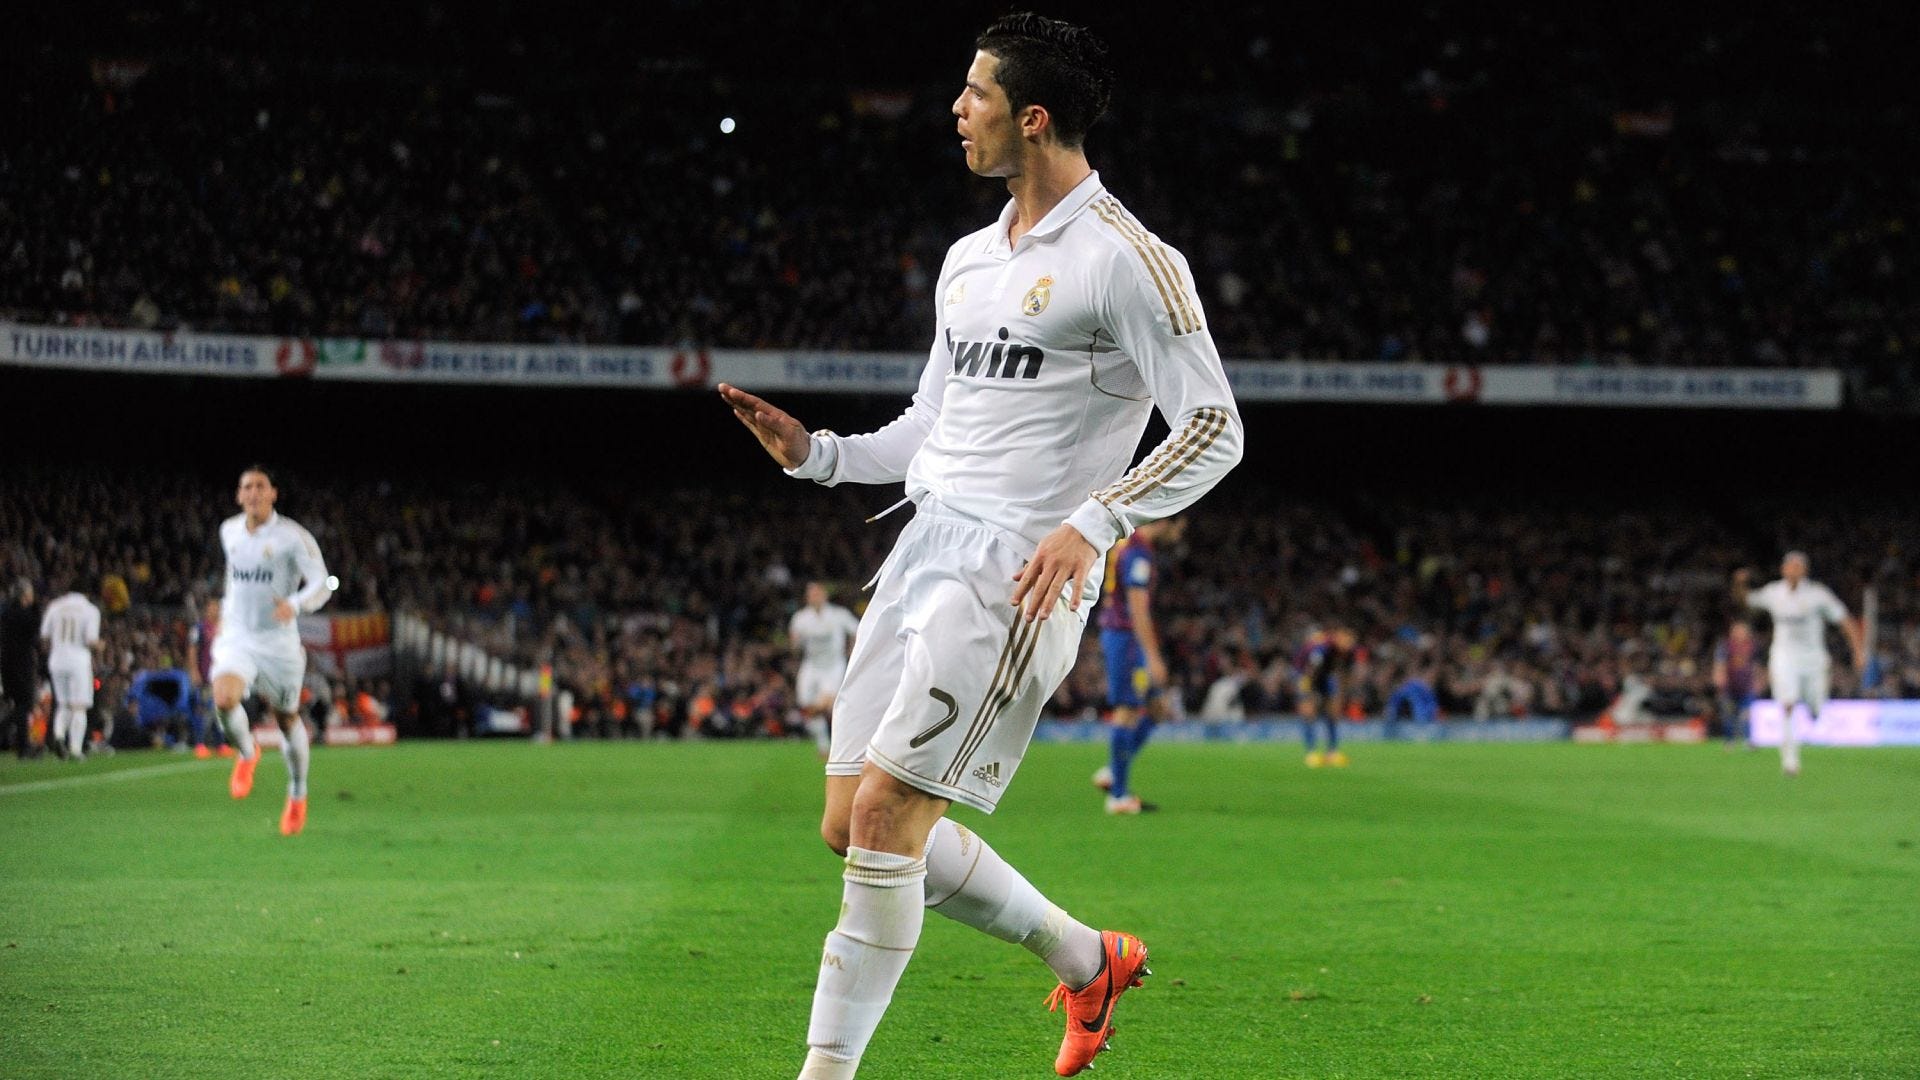 WATCH: Ronaldo boasts his free kick skills to son